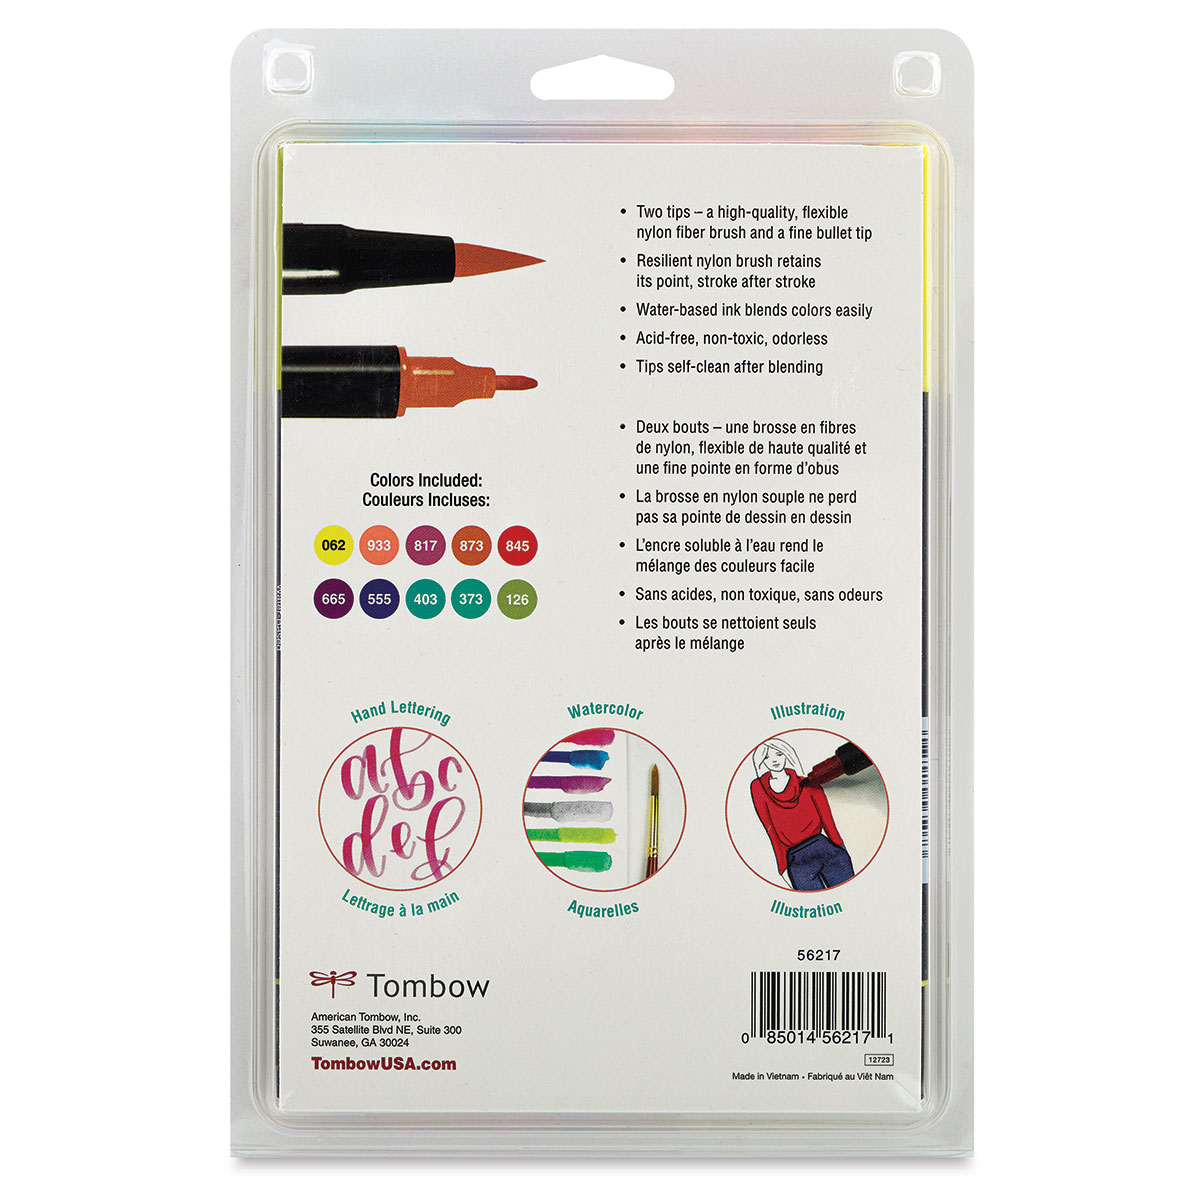 Dual Brush Pen Set - Retro Colors, Set of 10